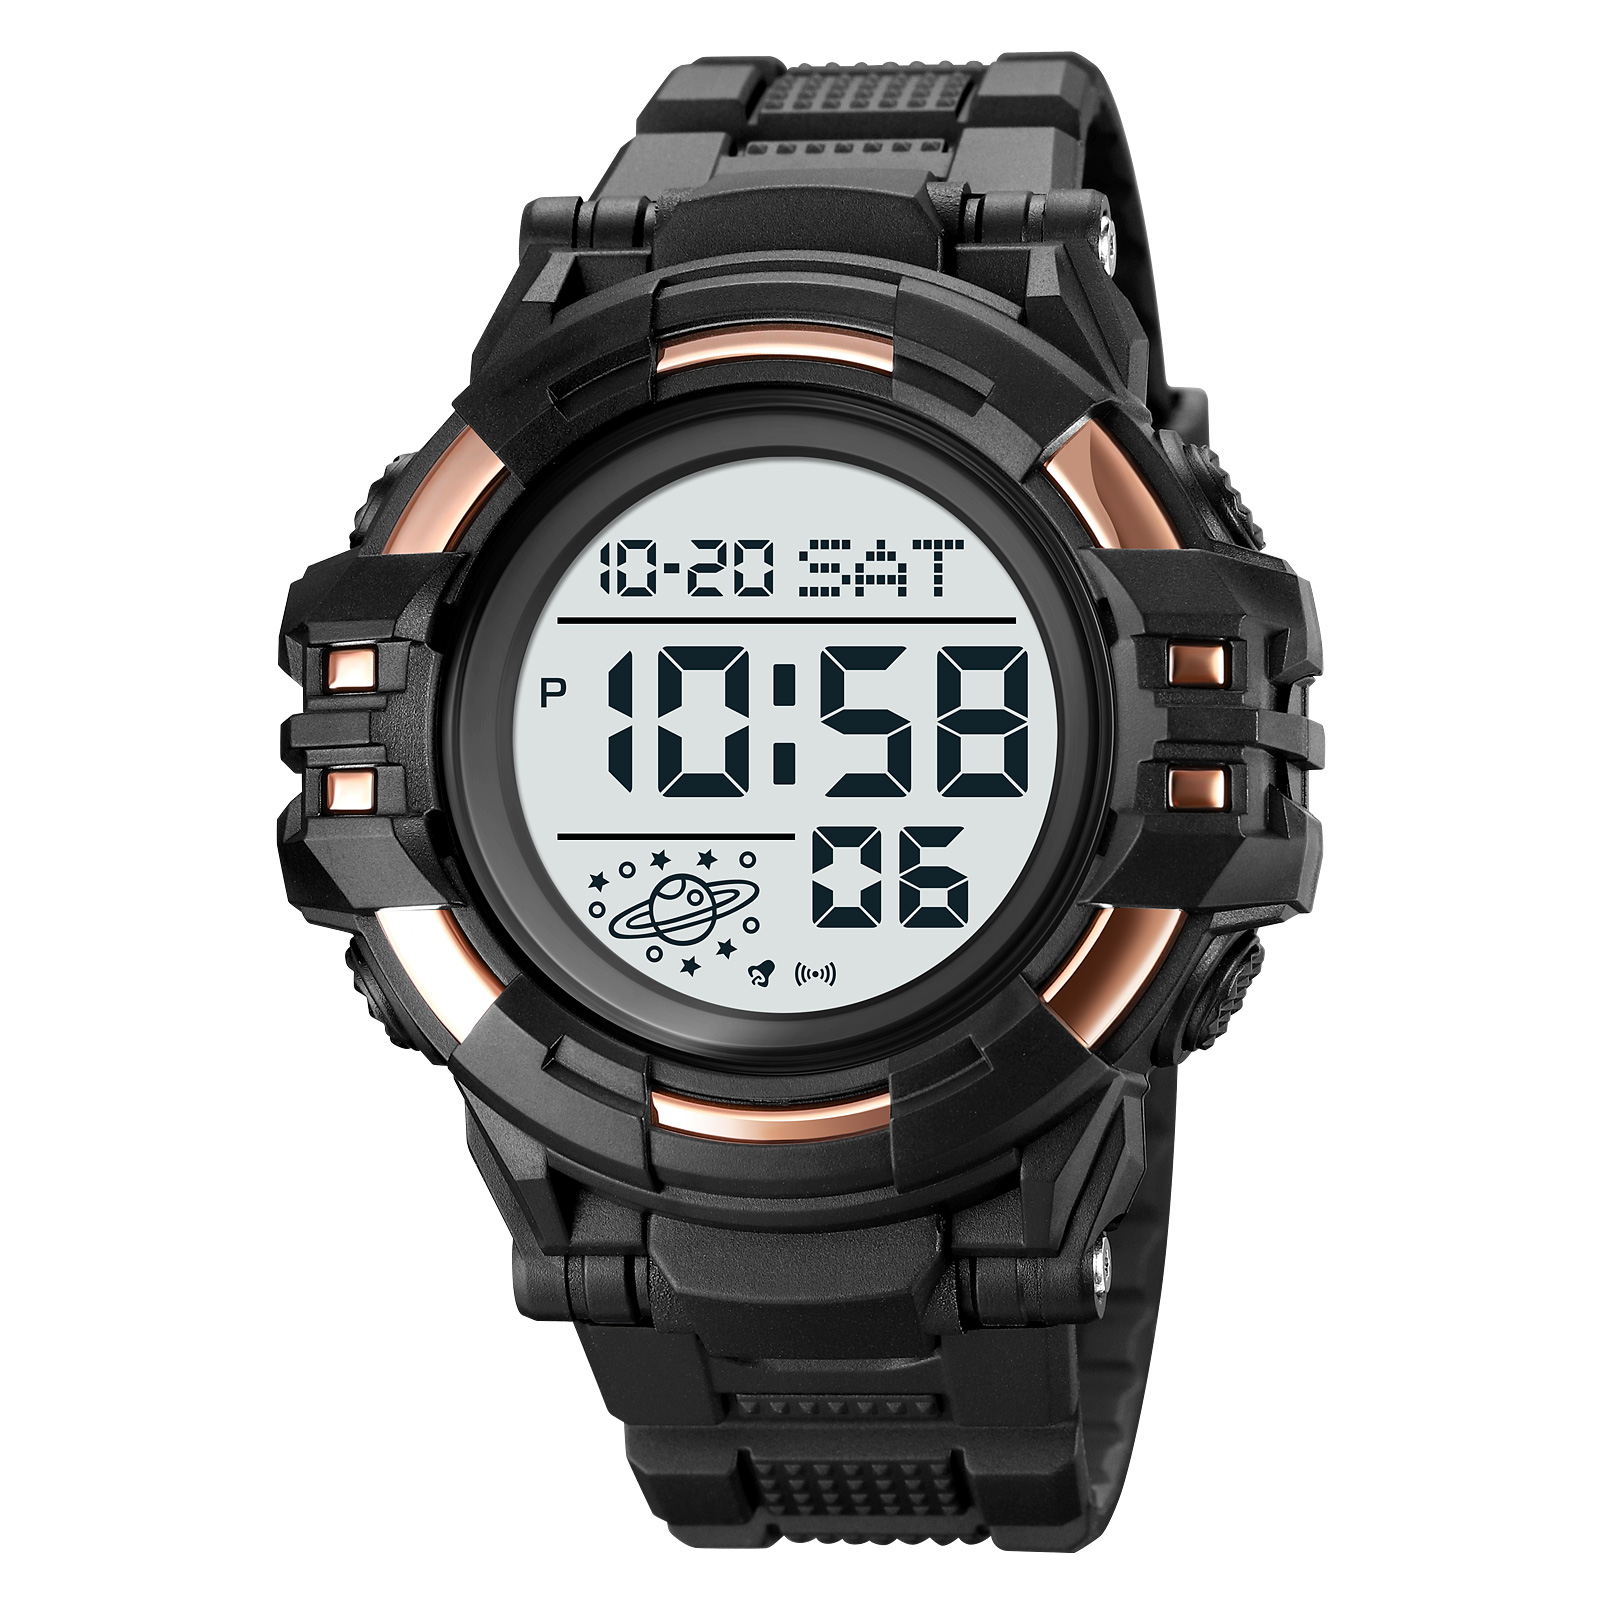 Wholesale Skmei watches-Skmei Watch Manufacture Co.,Ltd